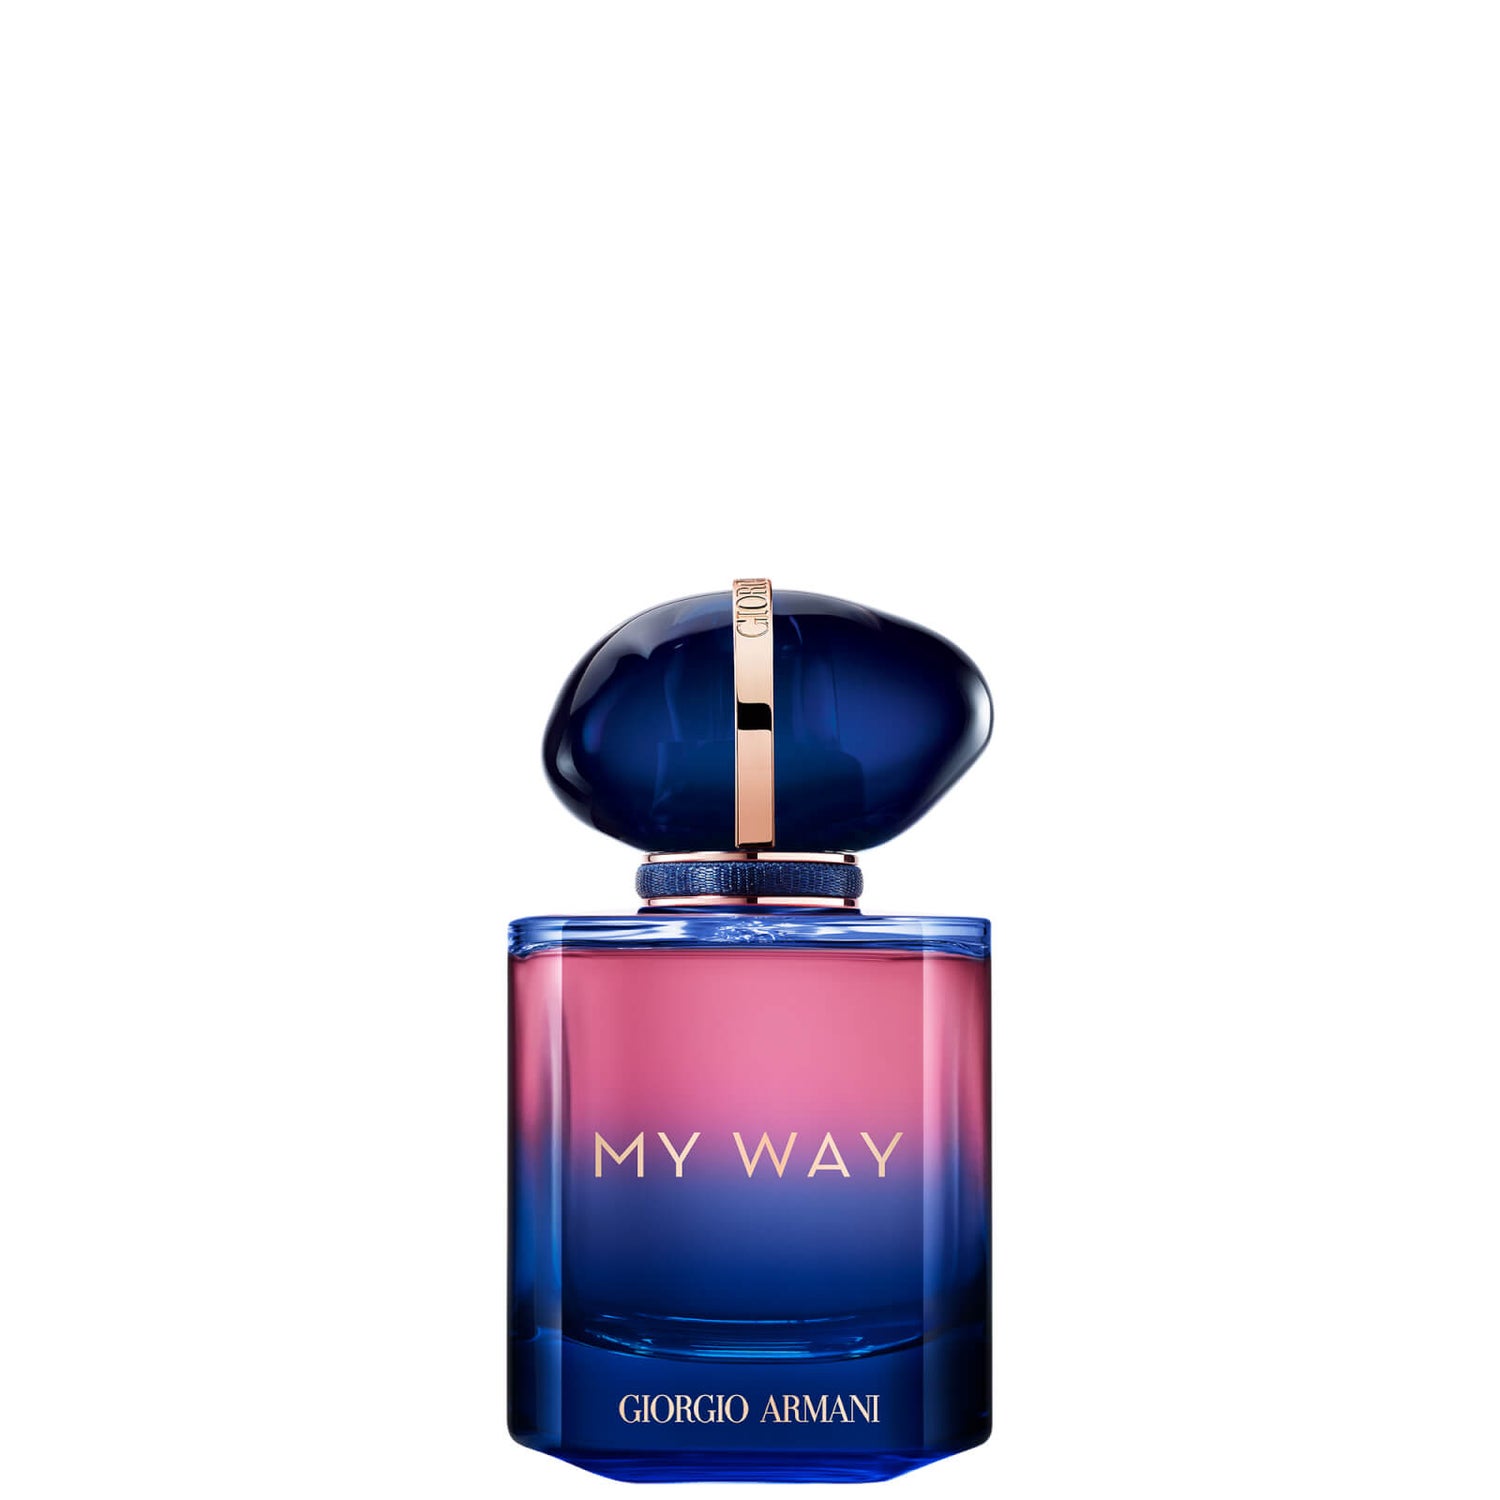 Giorgio Armani My Way Parfum 50ml - LOOKFANTASTIC